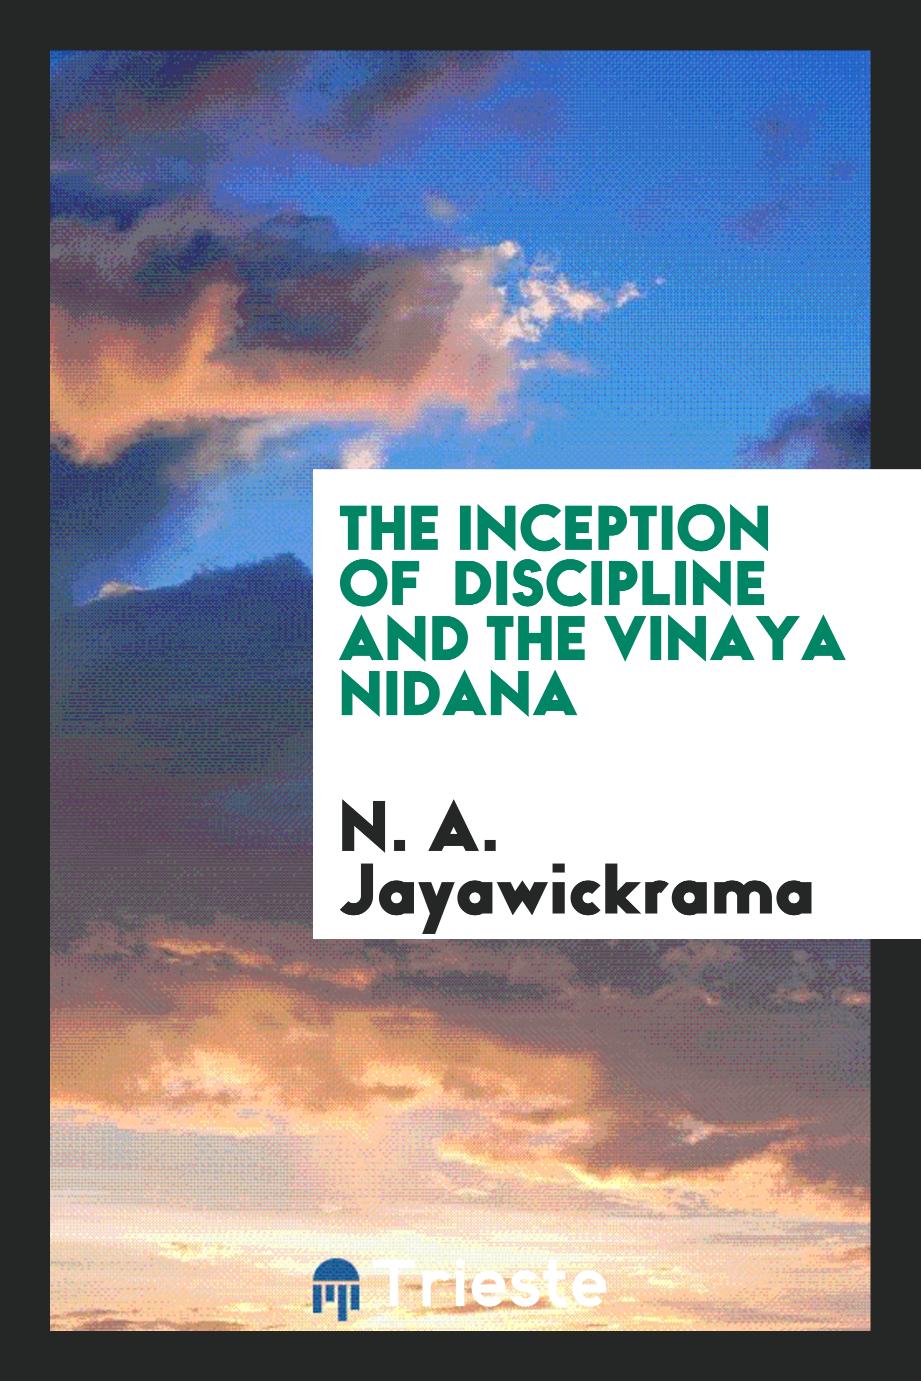 The inception of discipline and the vinaya nidana